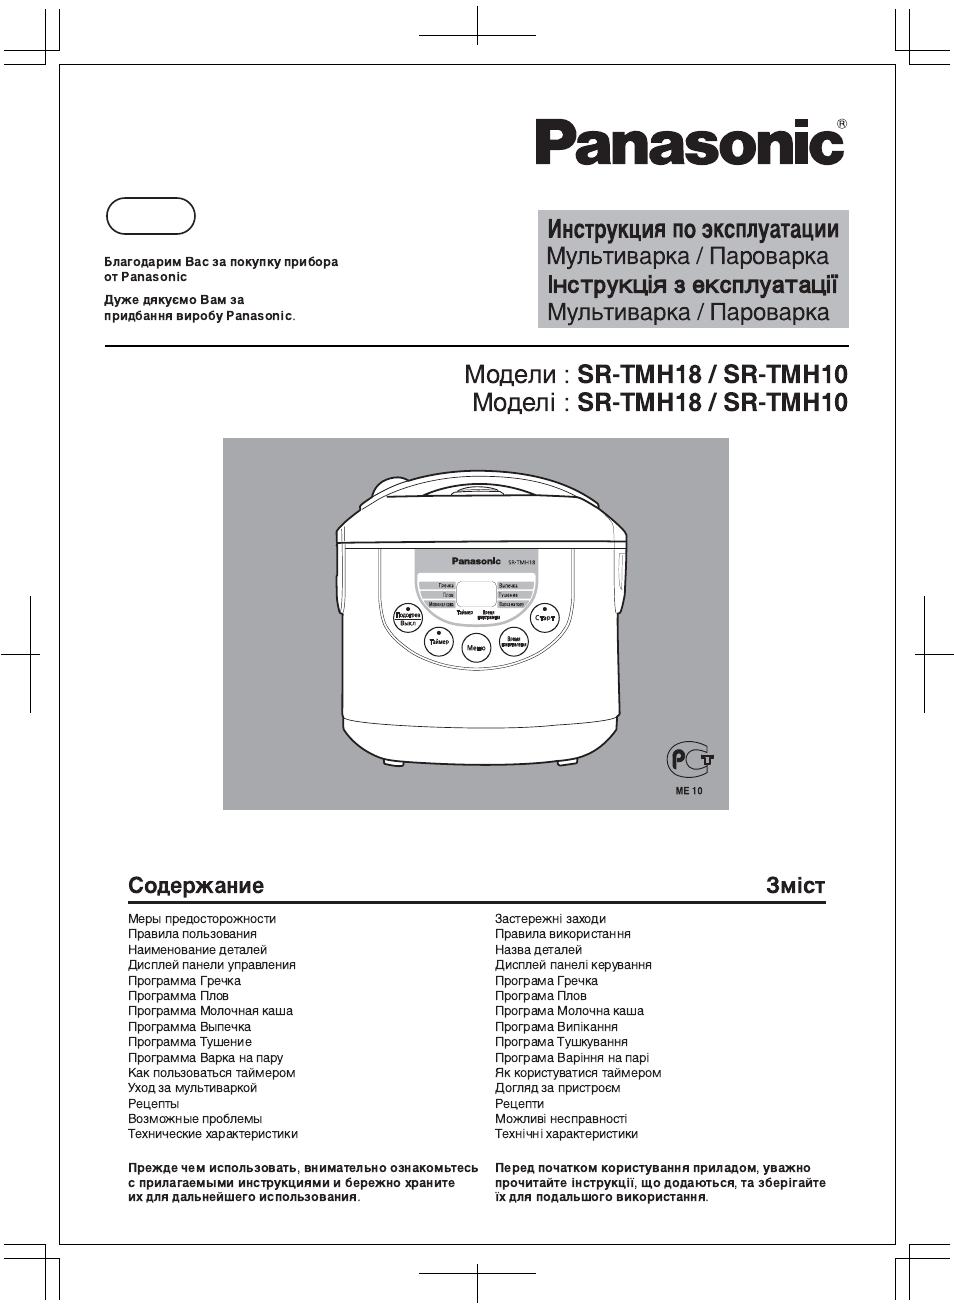 Инструкция по эксплуатации Panasonic SR-TMH10 | 56 страниц